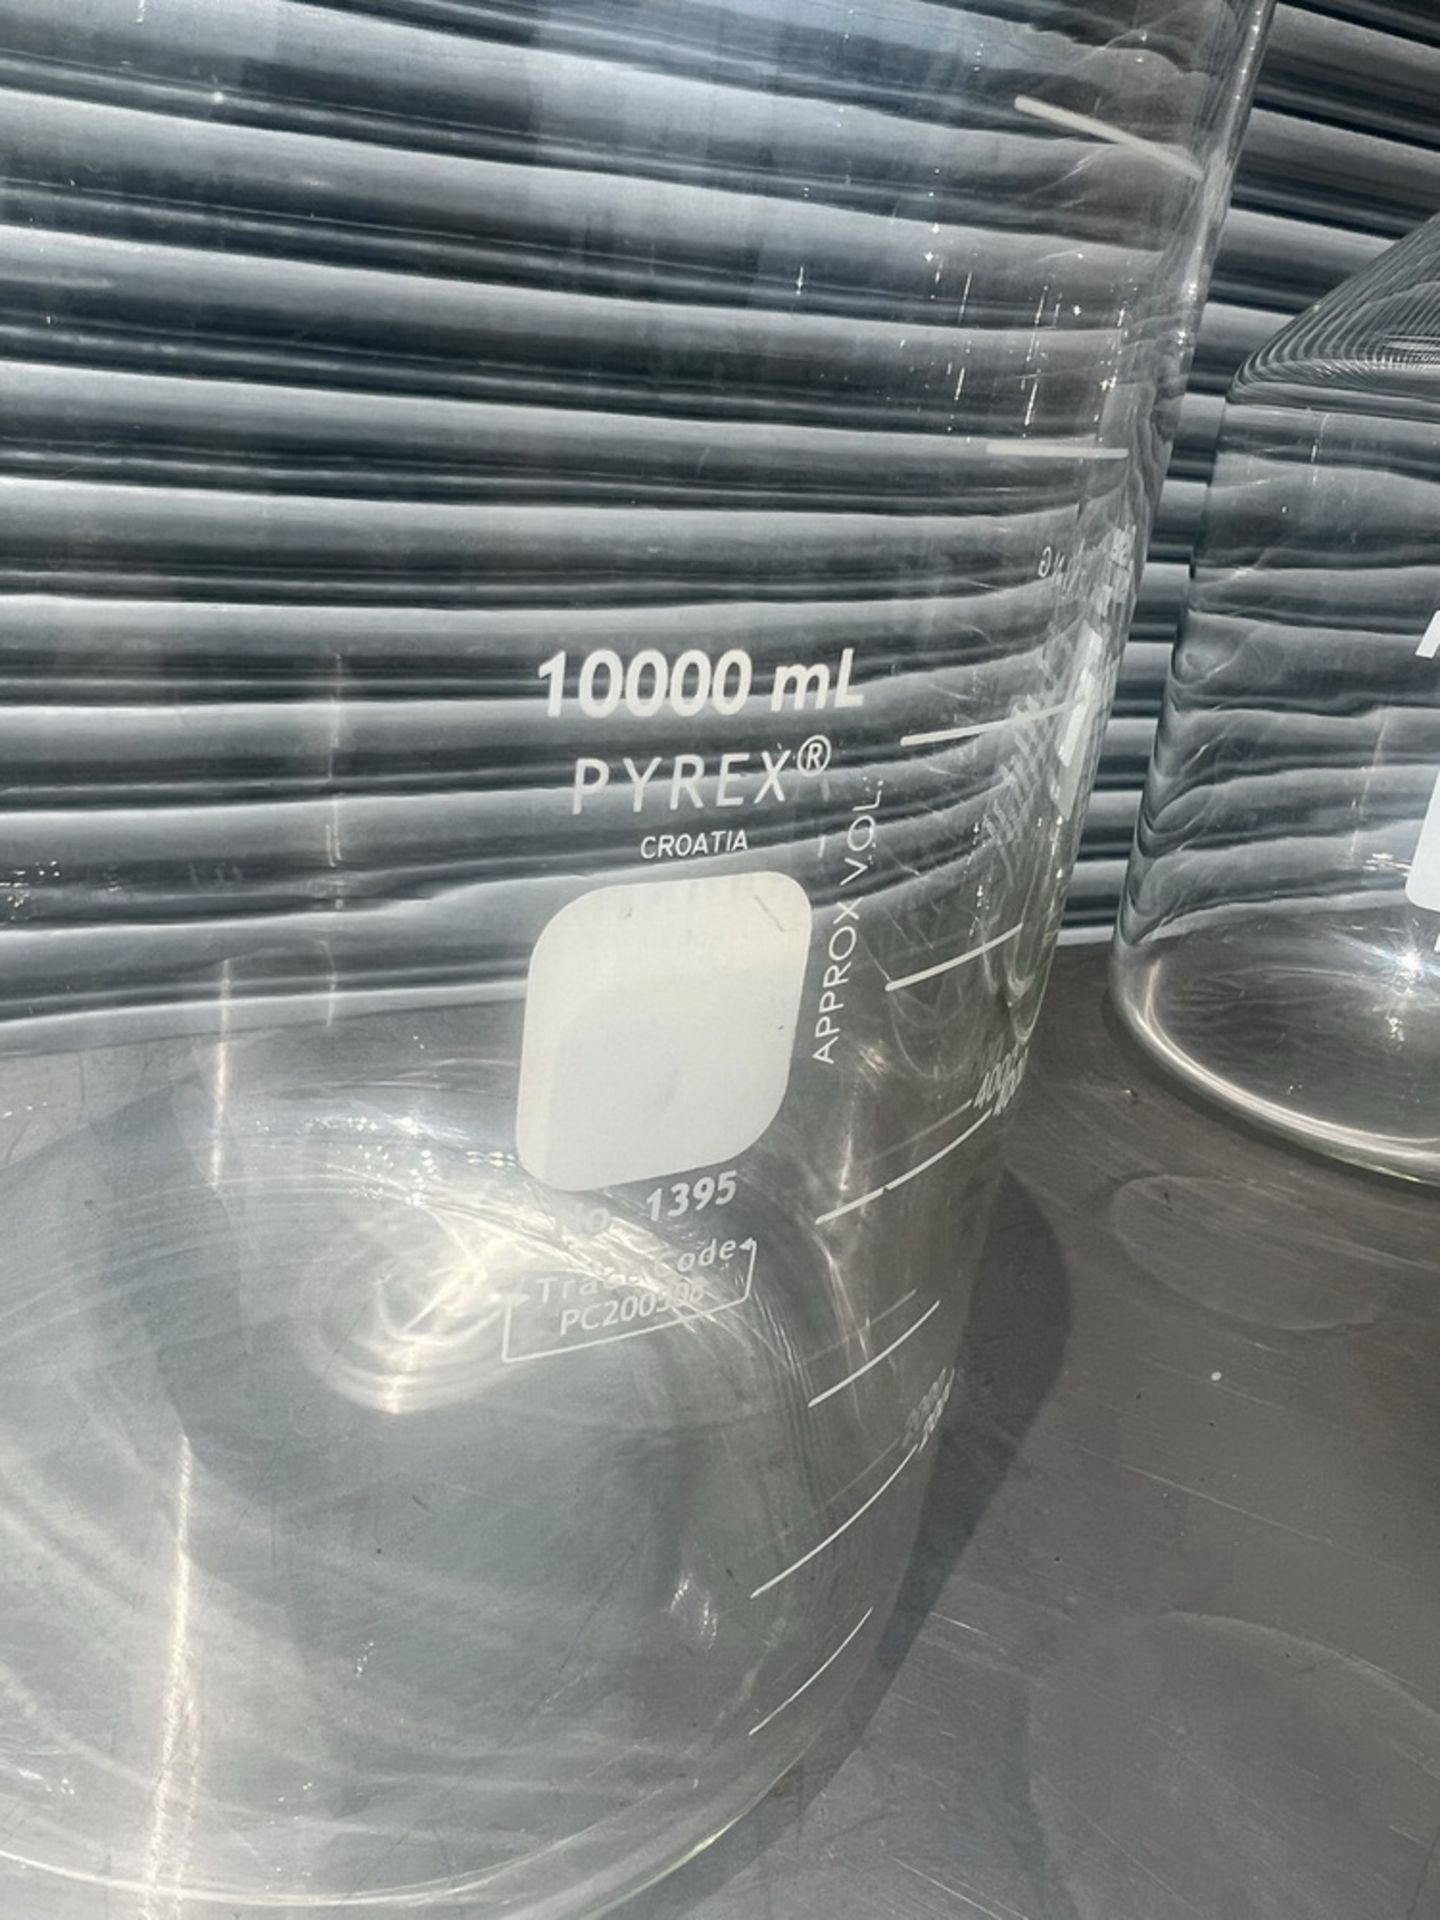 Pyrex 10000 ml Media Storage Bottle - Image 2 of 2